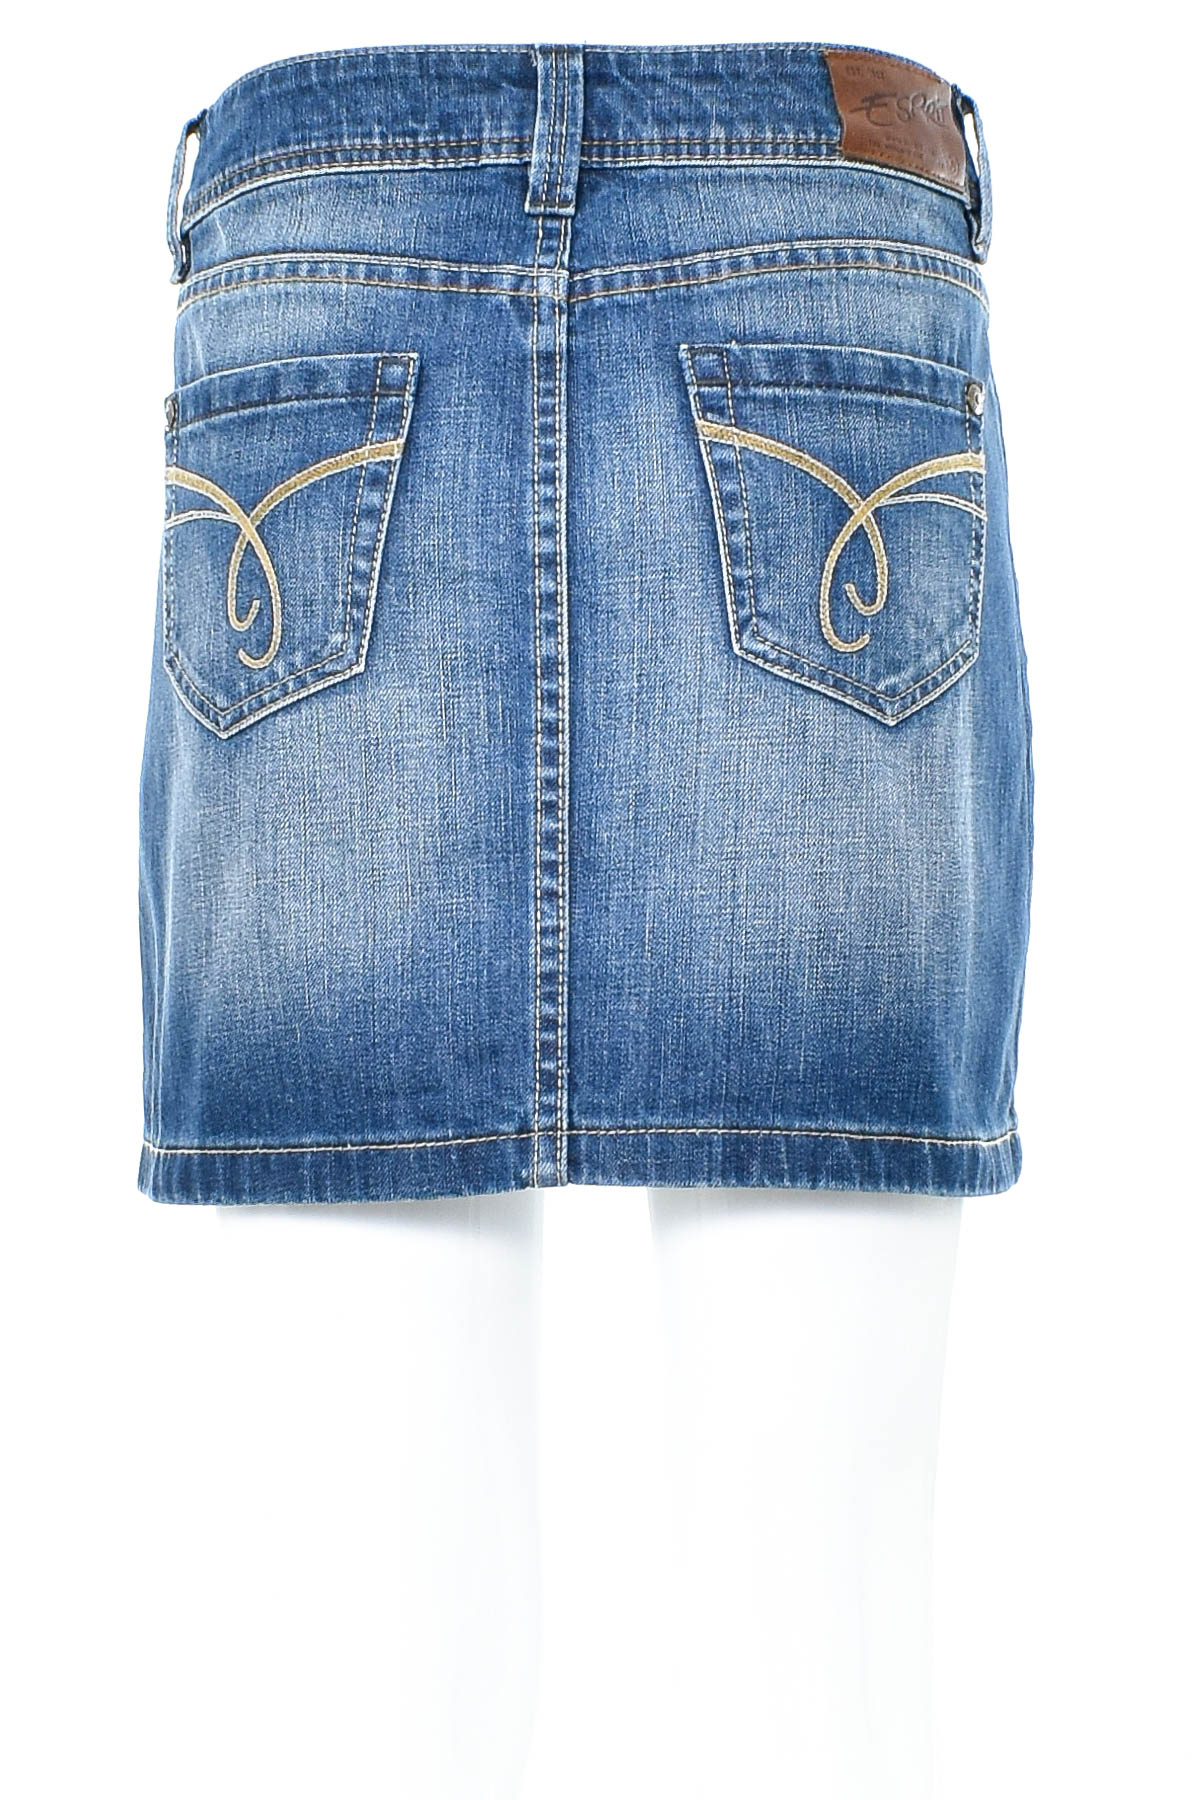 Spódnica jeansowa - ESPRIT Denim - 1